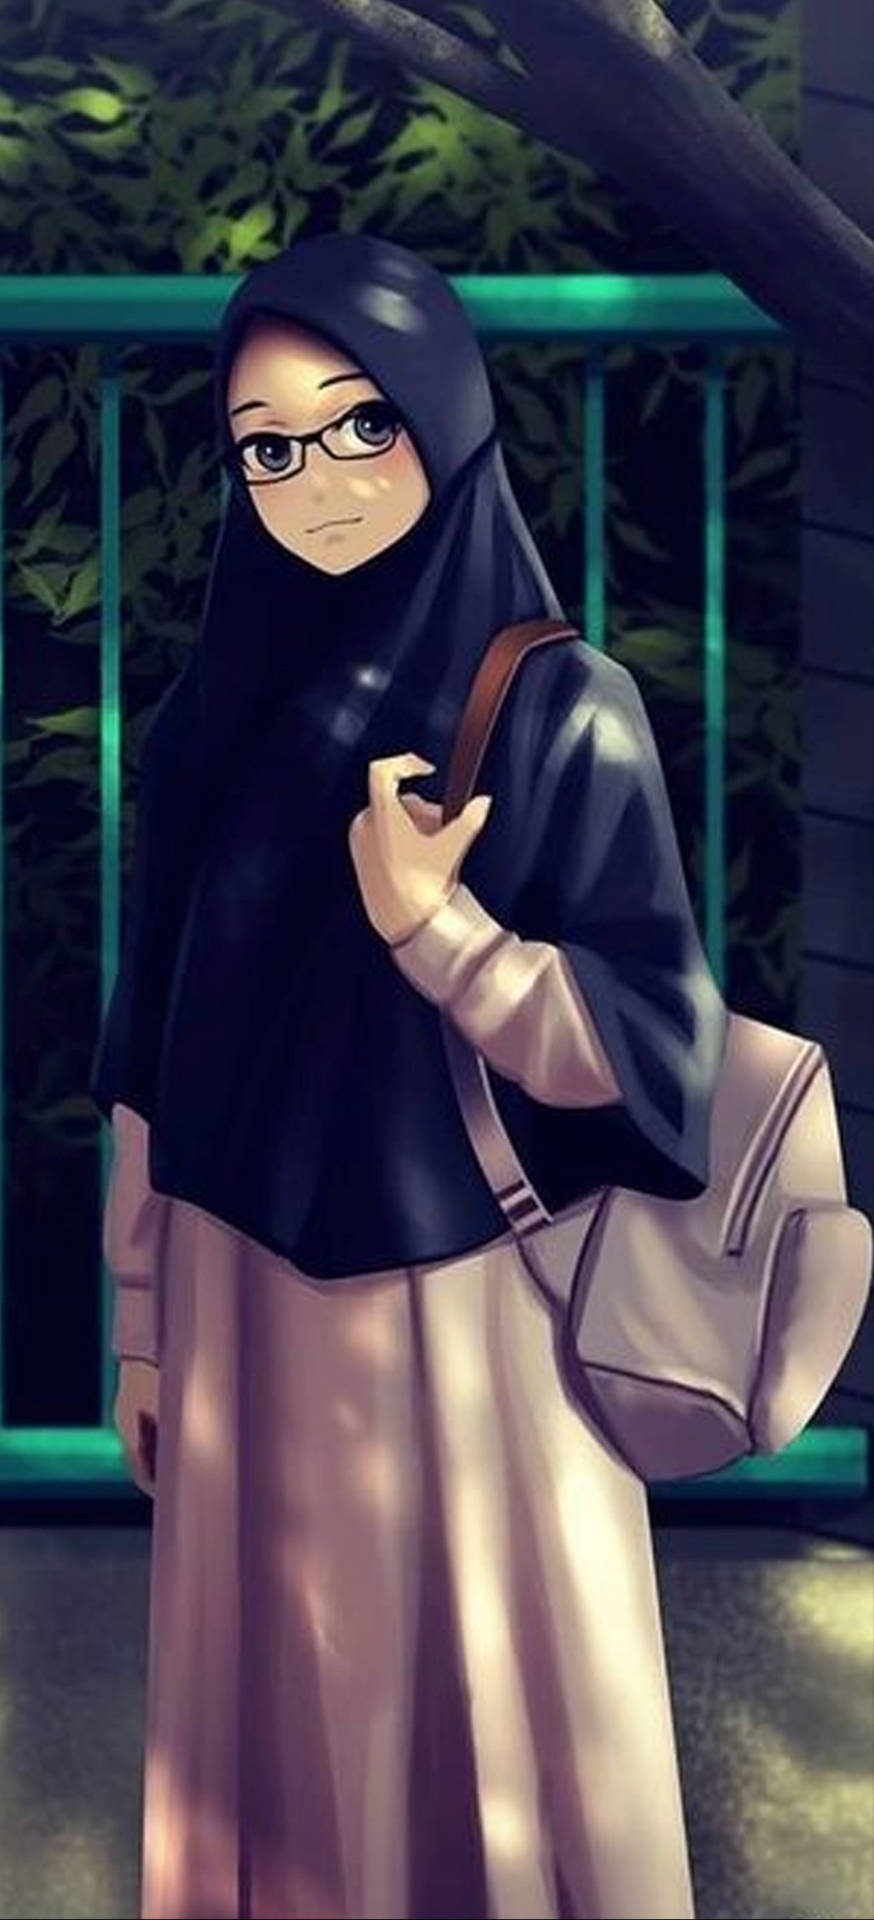 Hijab Cartoon Girl Bagpack